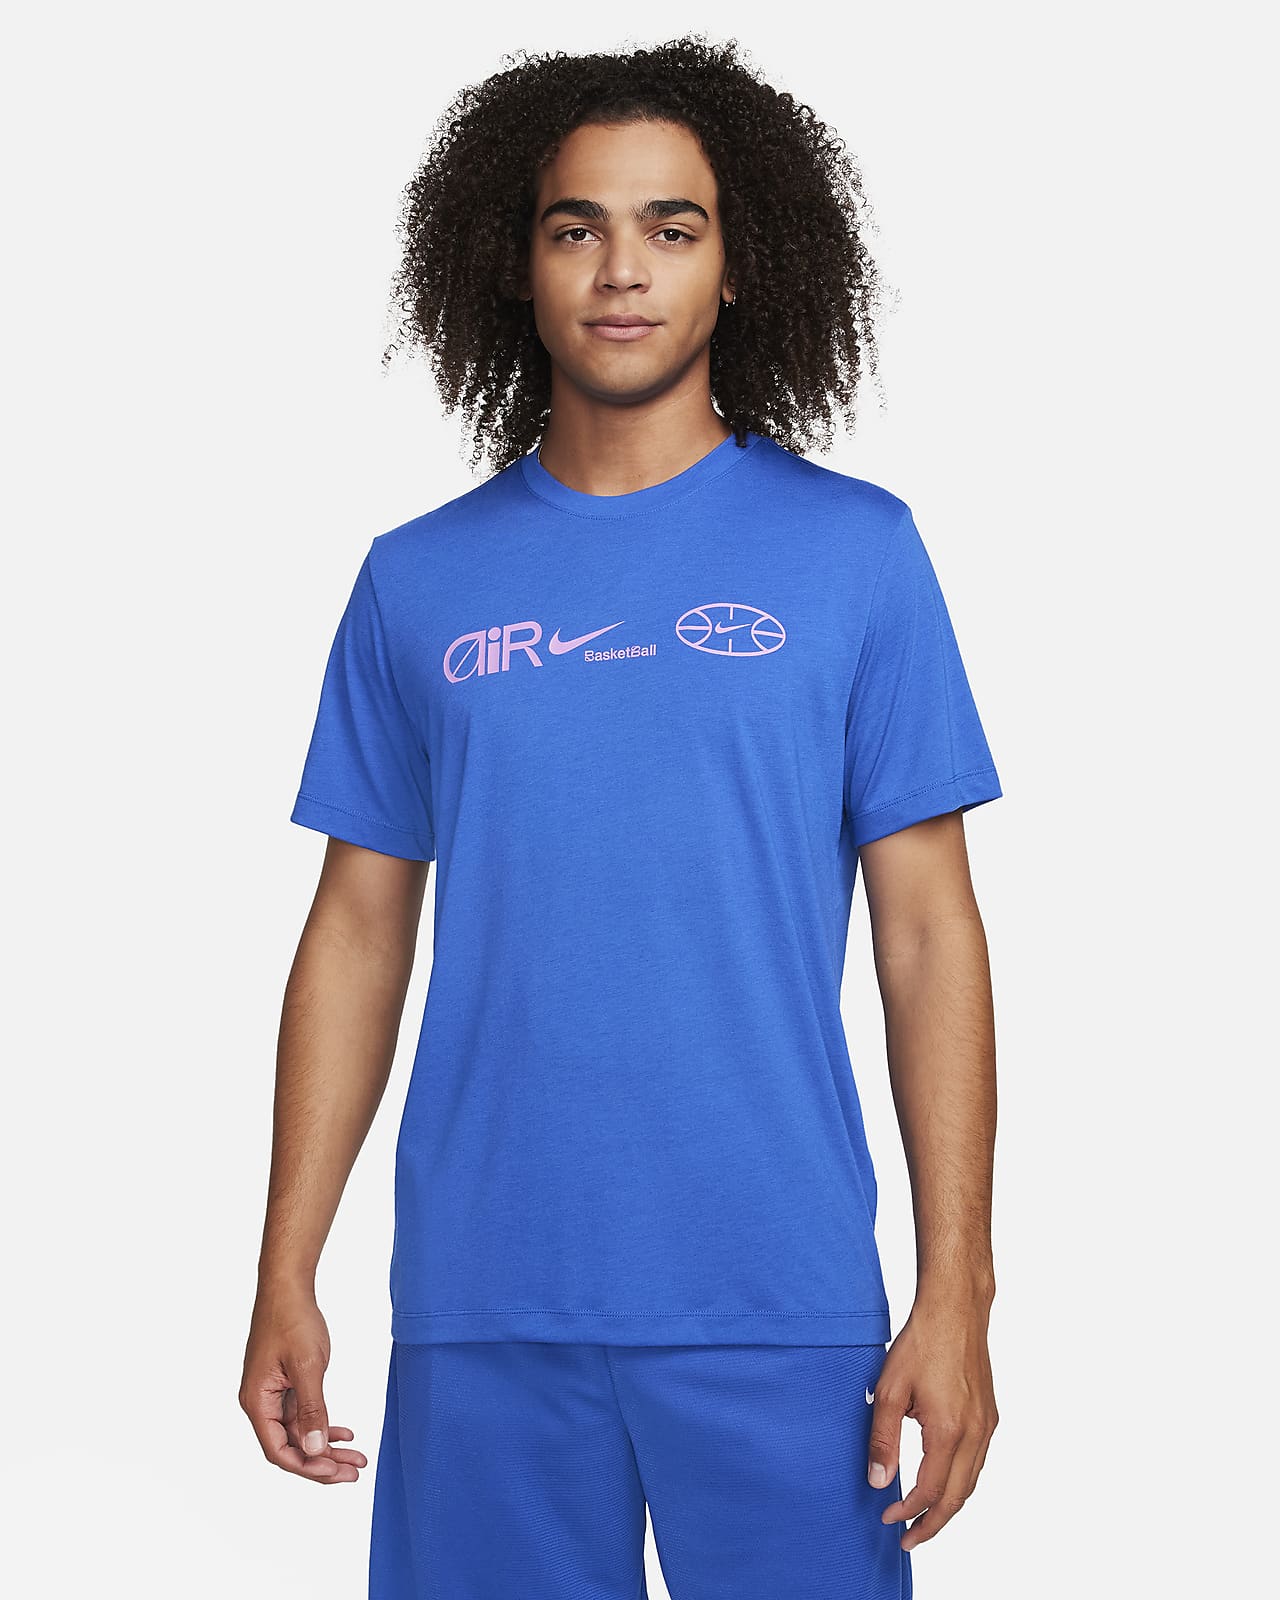 Nike Dri-Fit Shirt Large Mens - Basketball Hoop